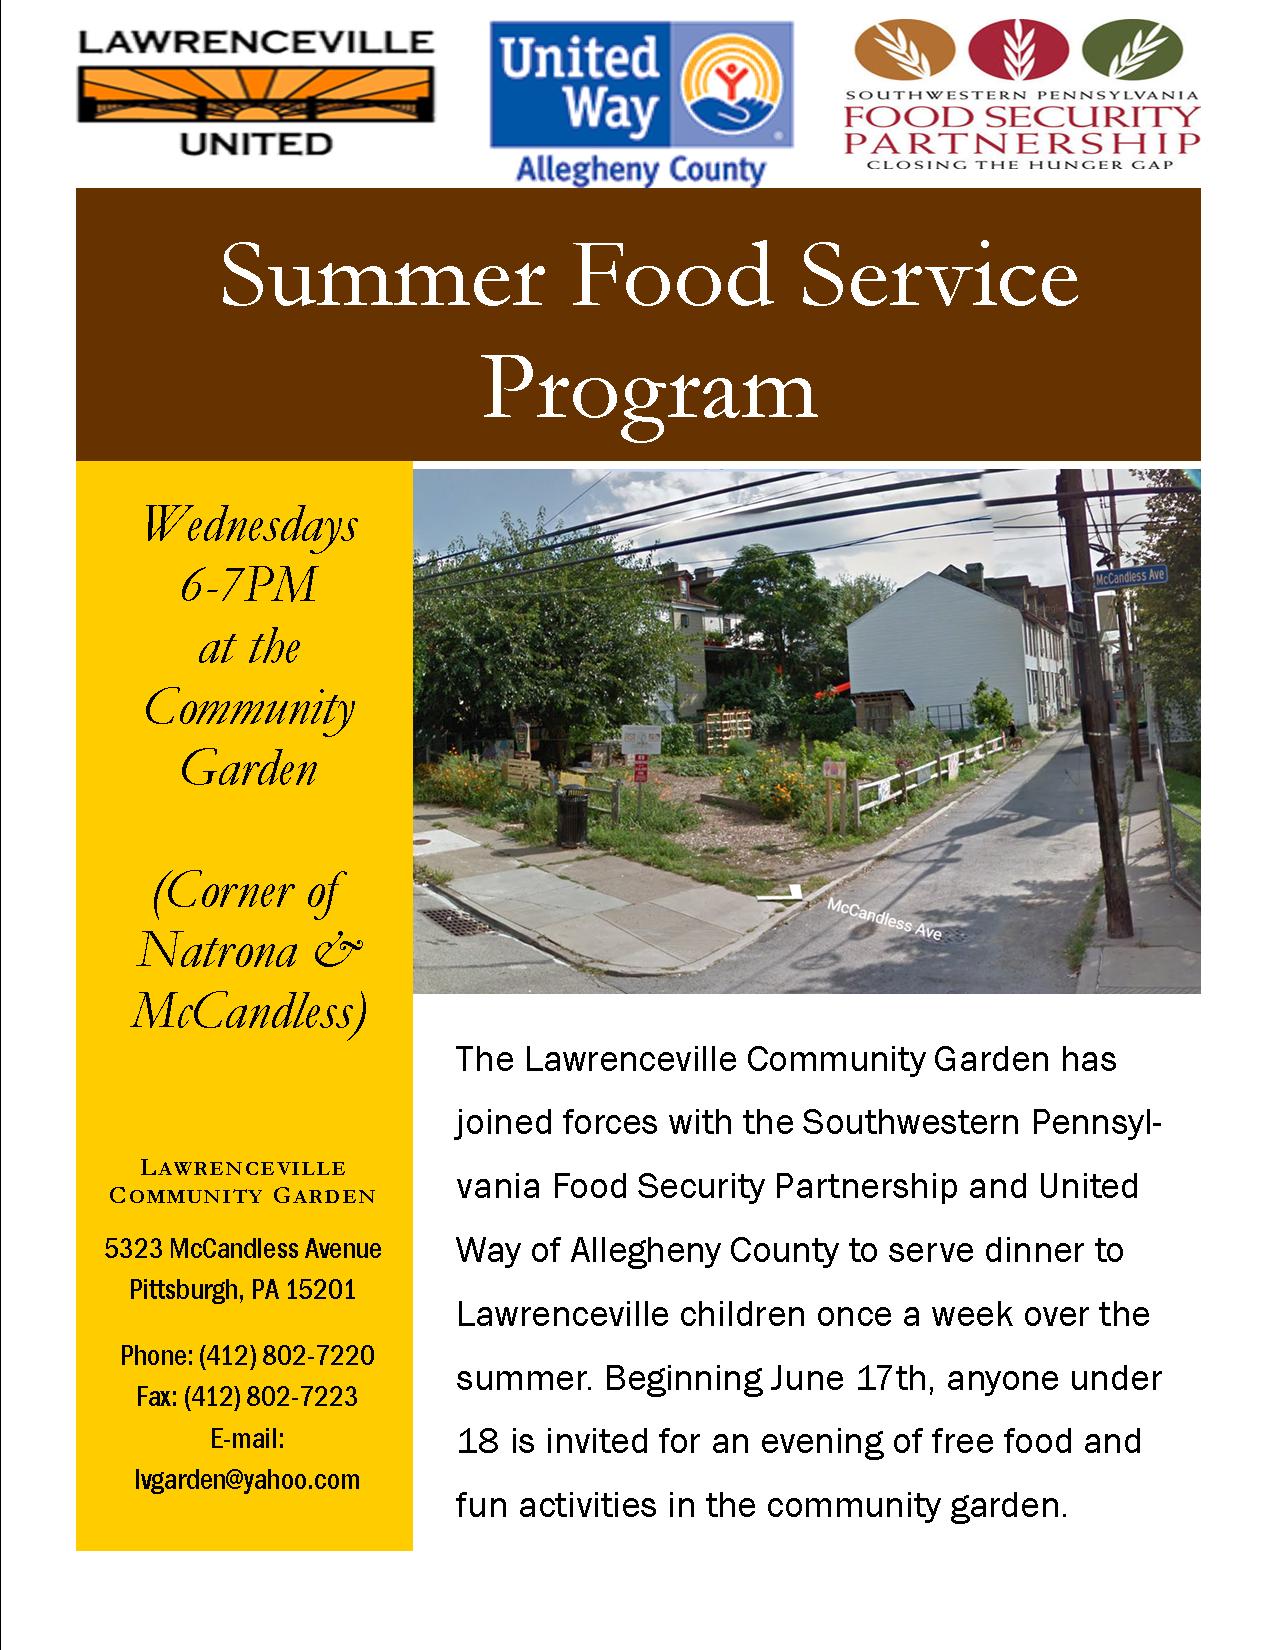 Summer Food Services Program